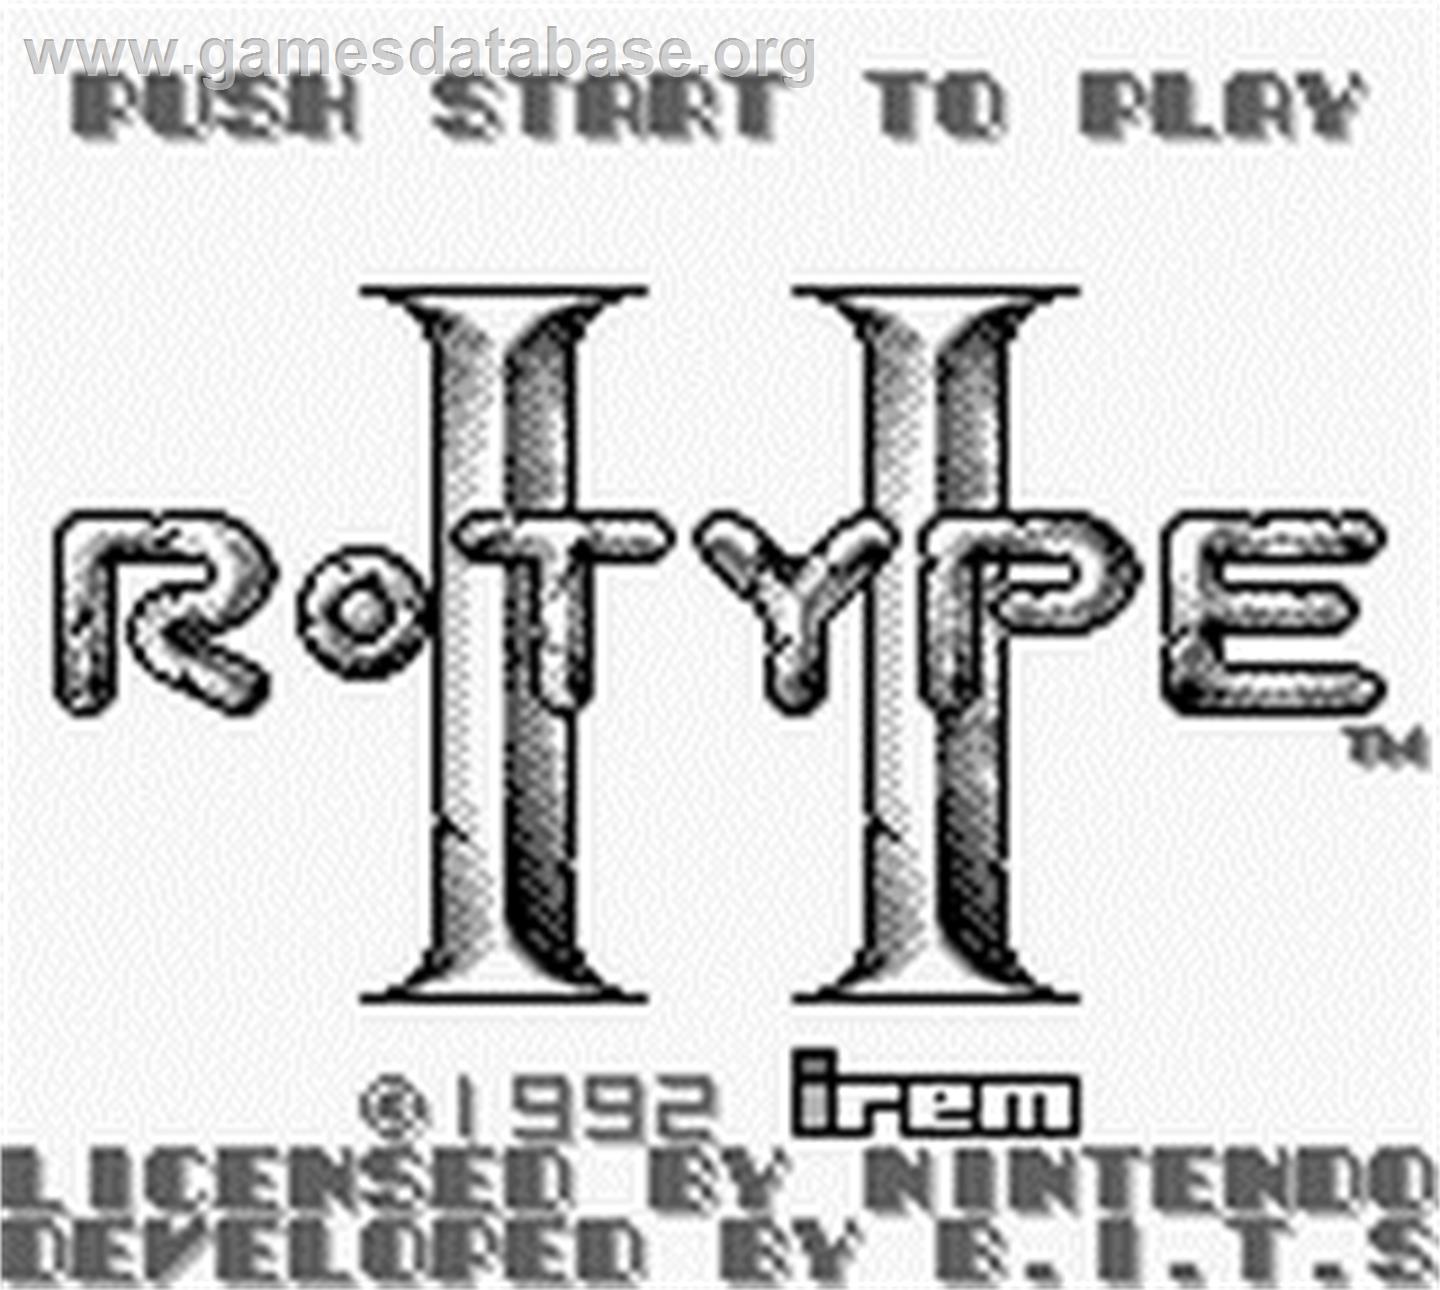 R-Type II - Nintendo Game Boy - Artwork - Title Screen